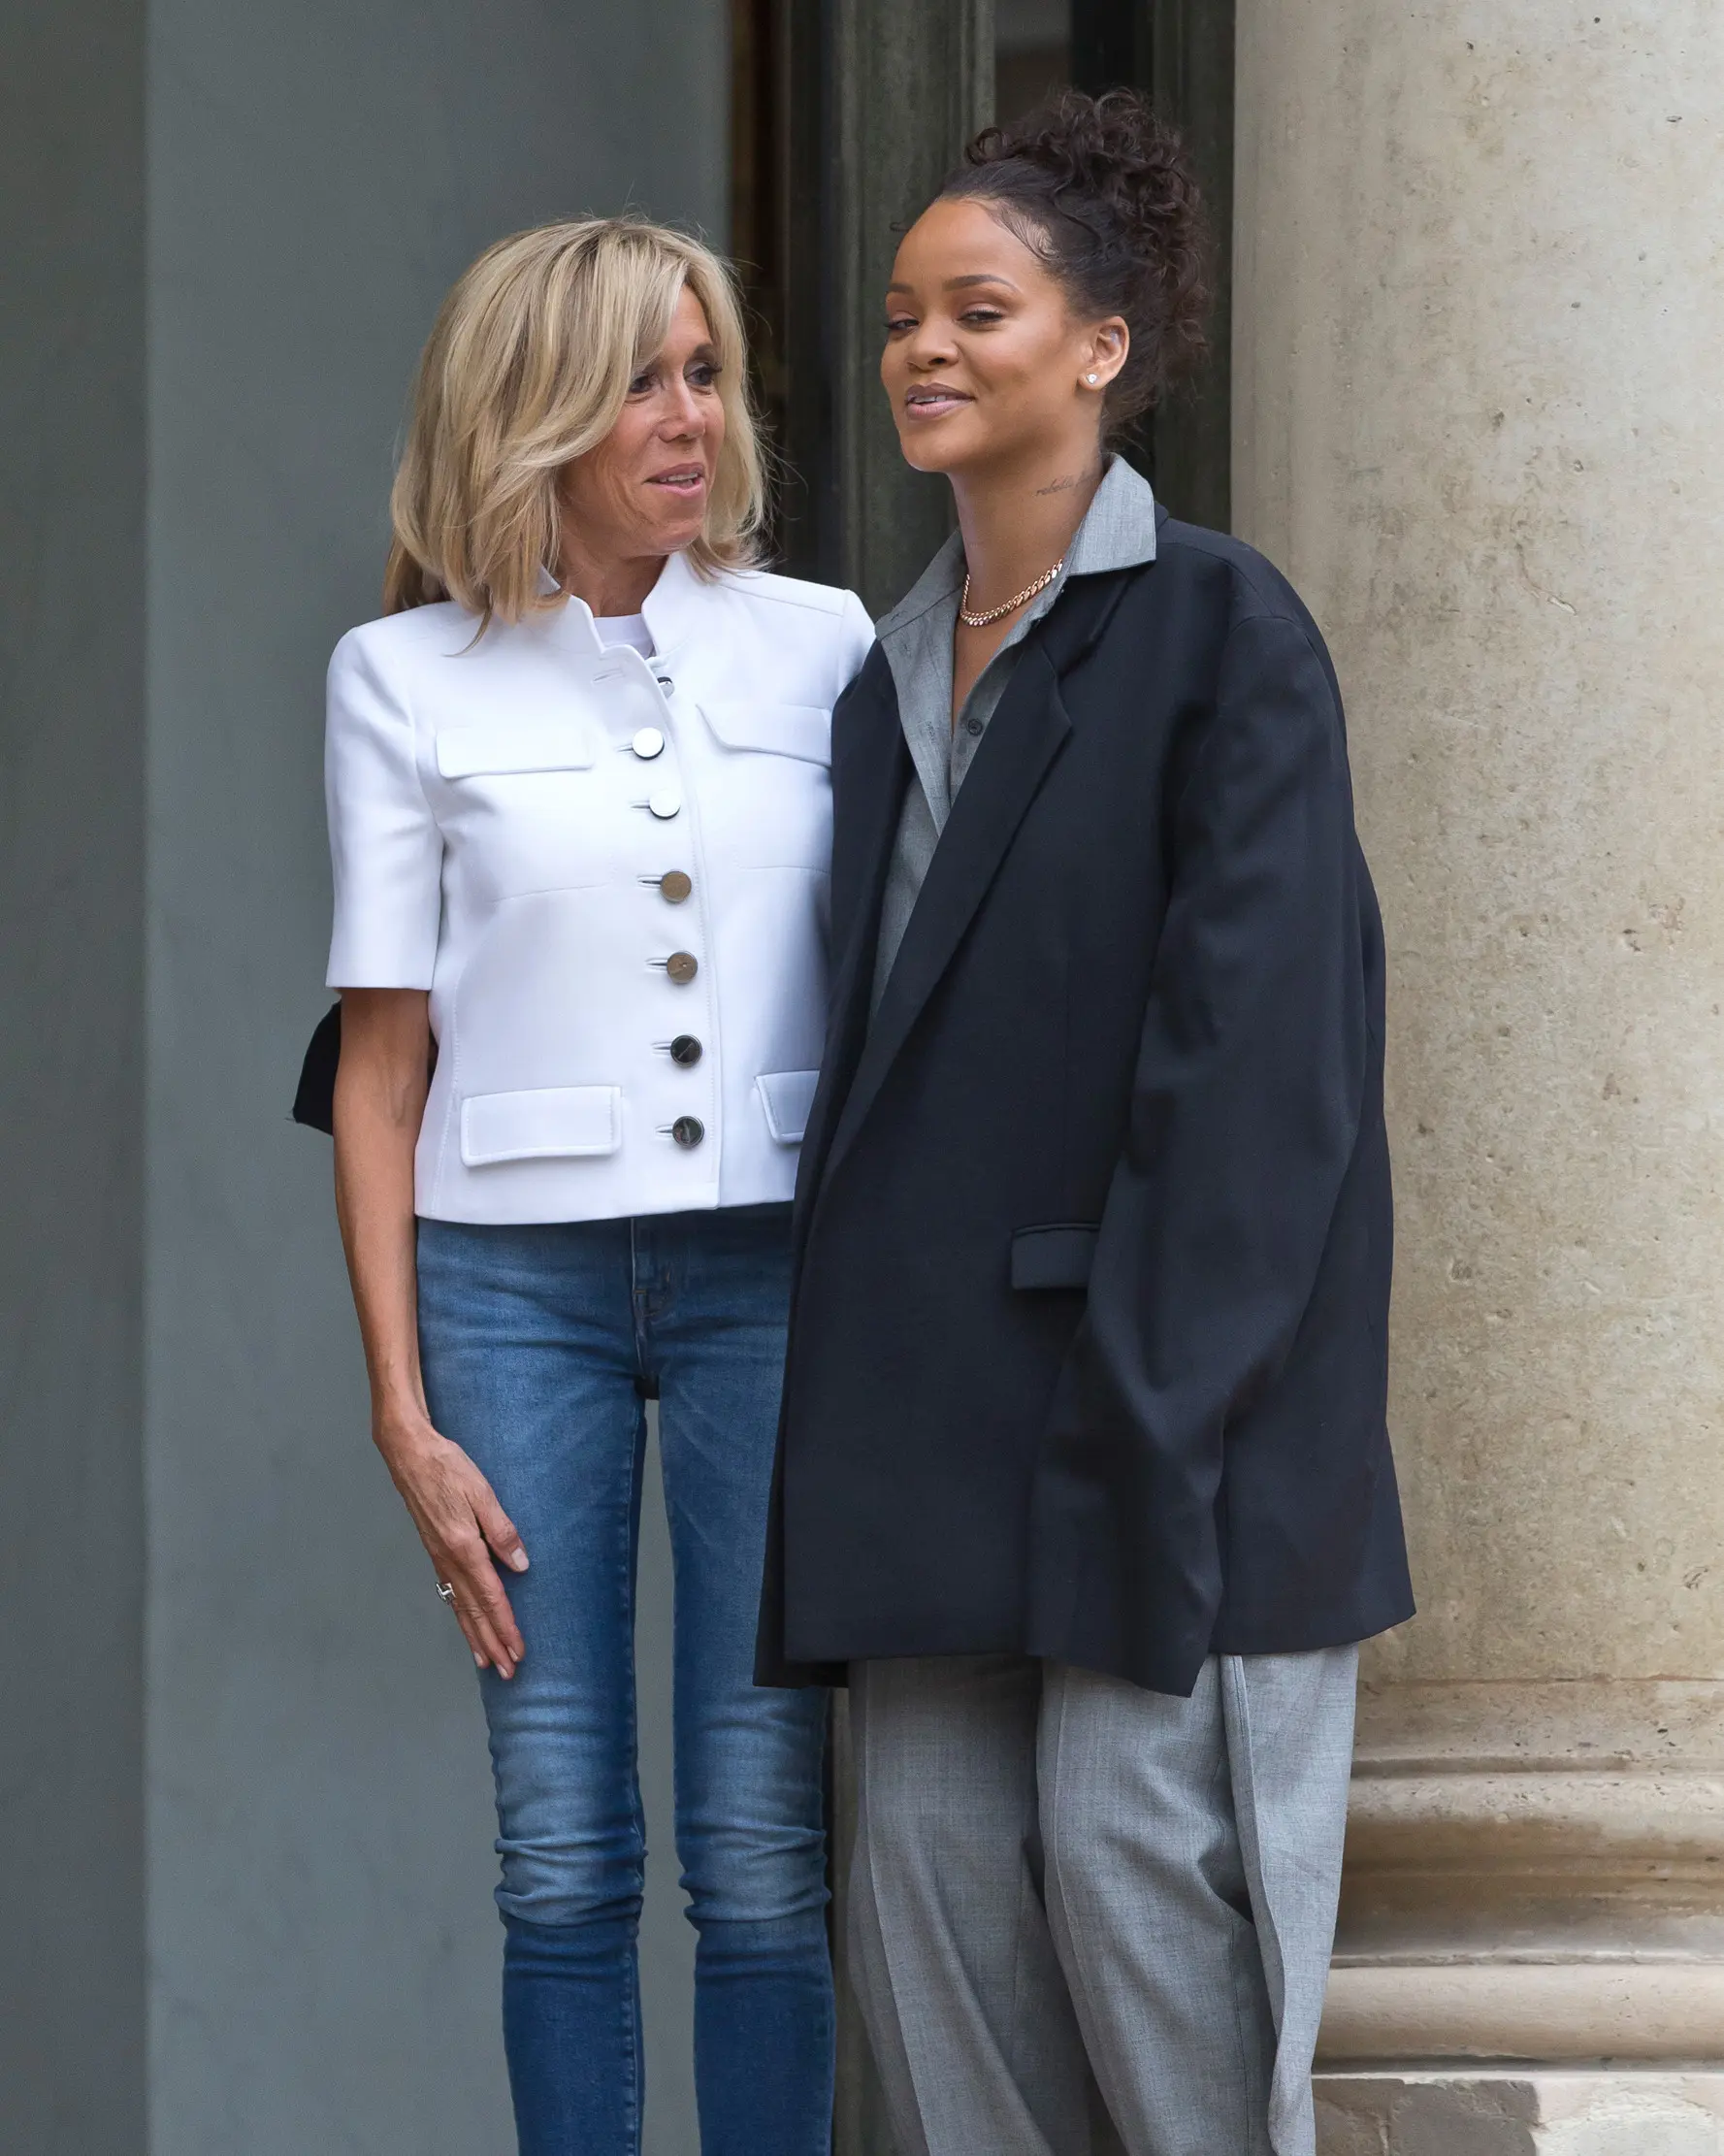  Penyanyi Rihanna bersama istri Presiden Prancis, Brigitte Macron. (AP Photo / Michel Euler)